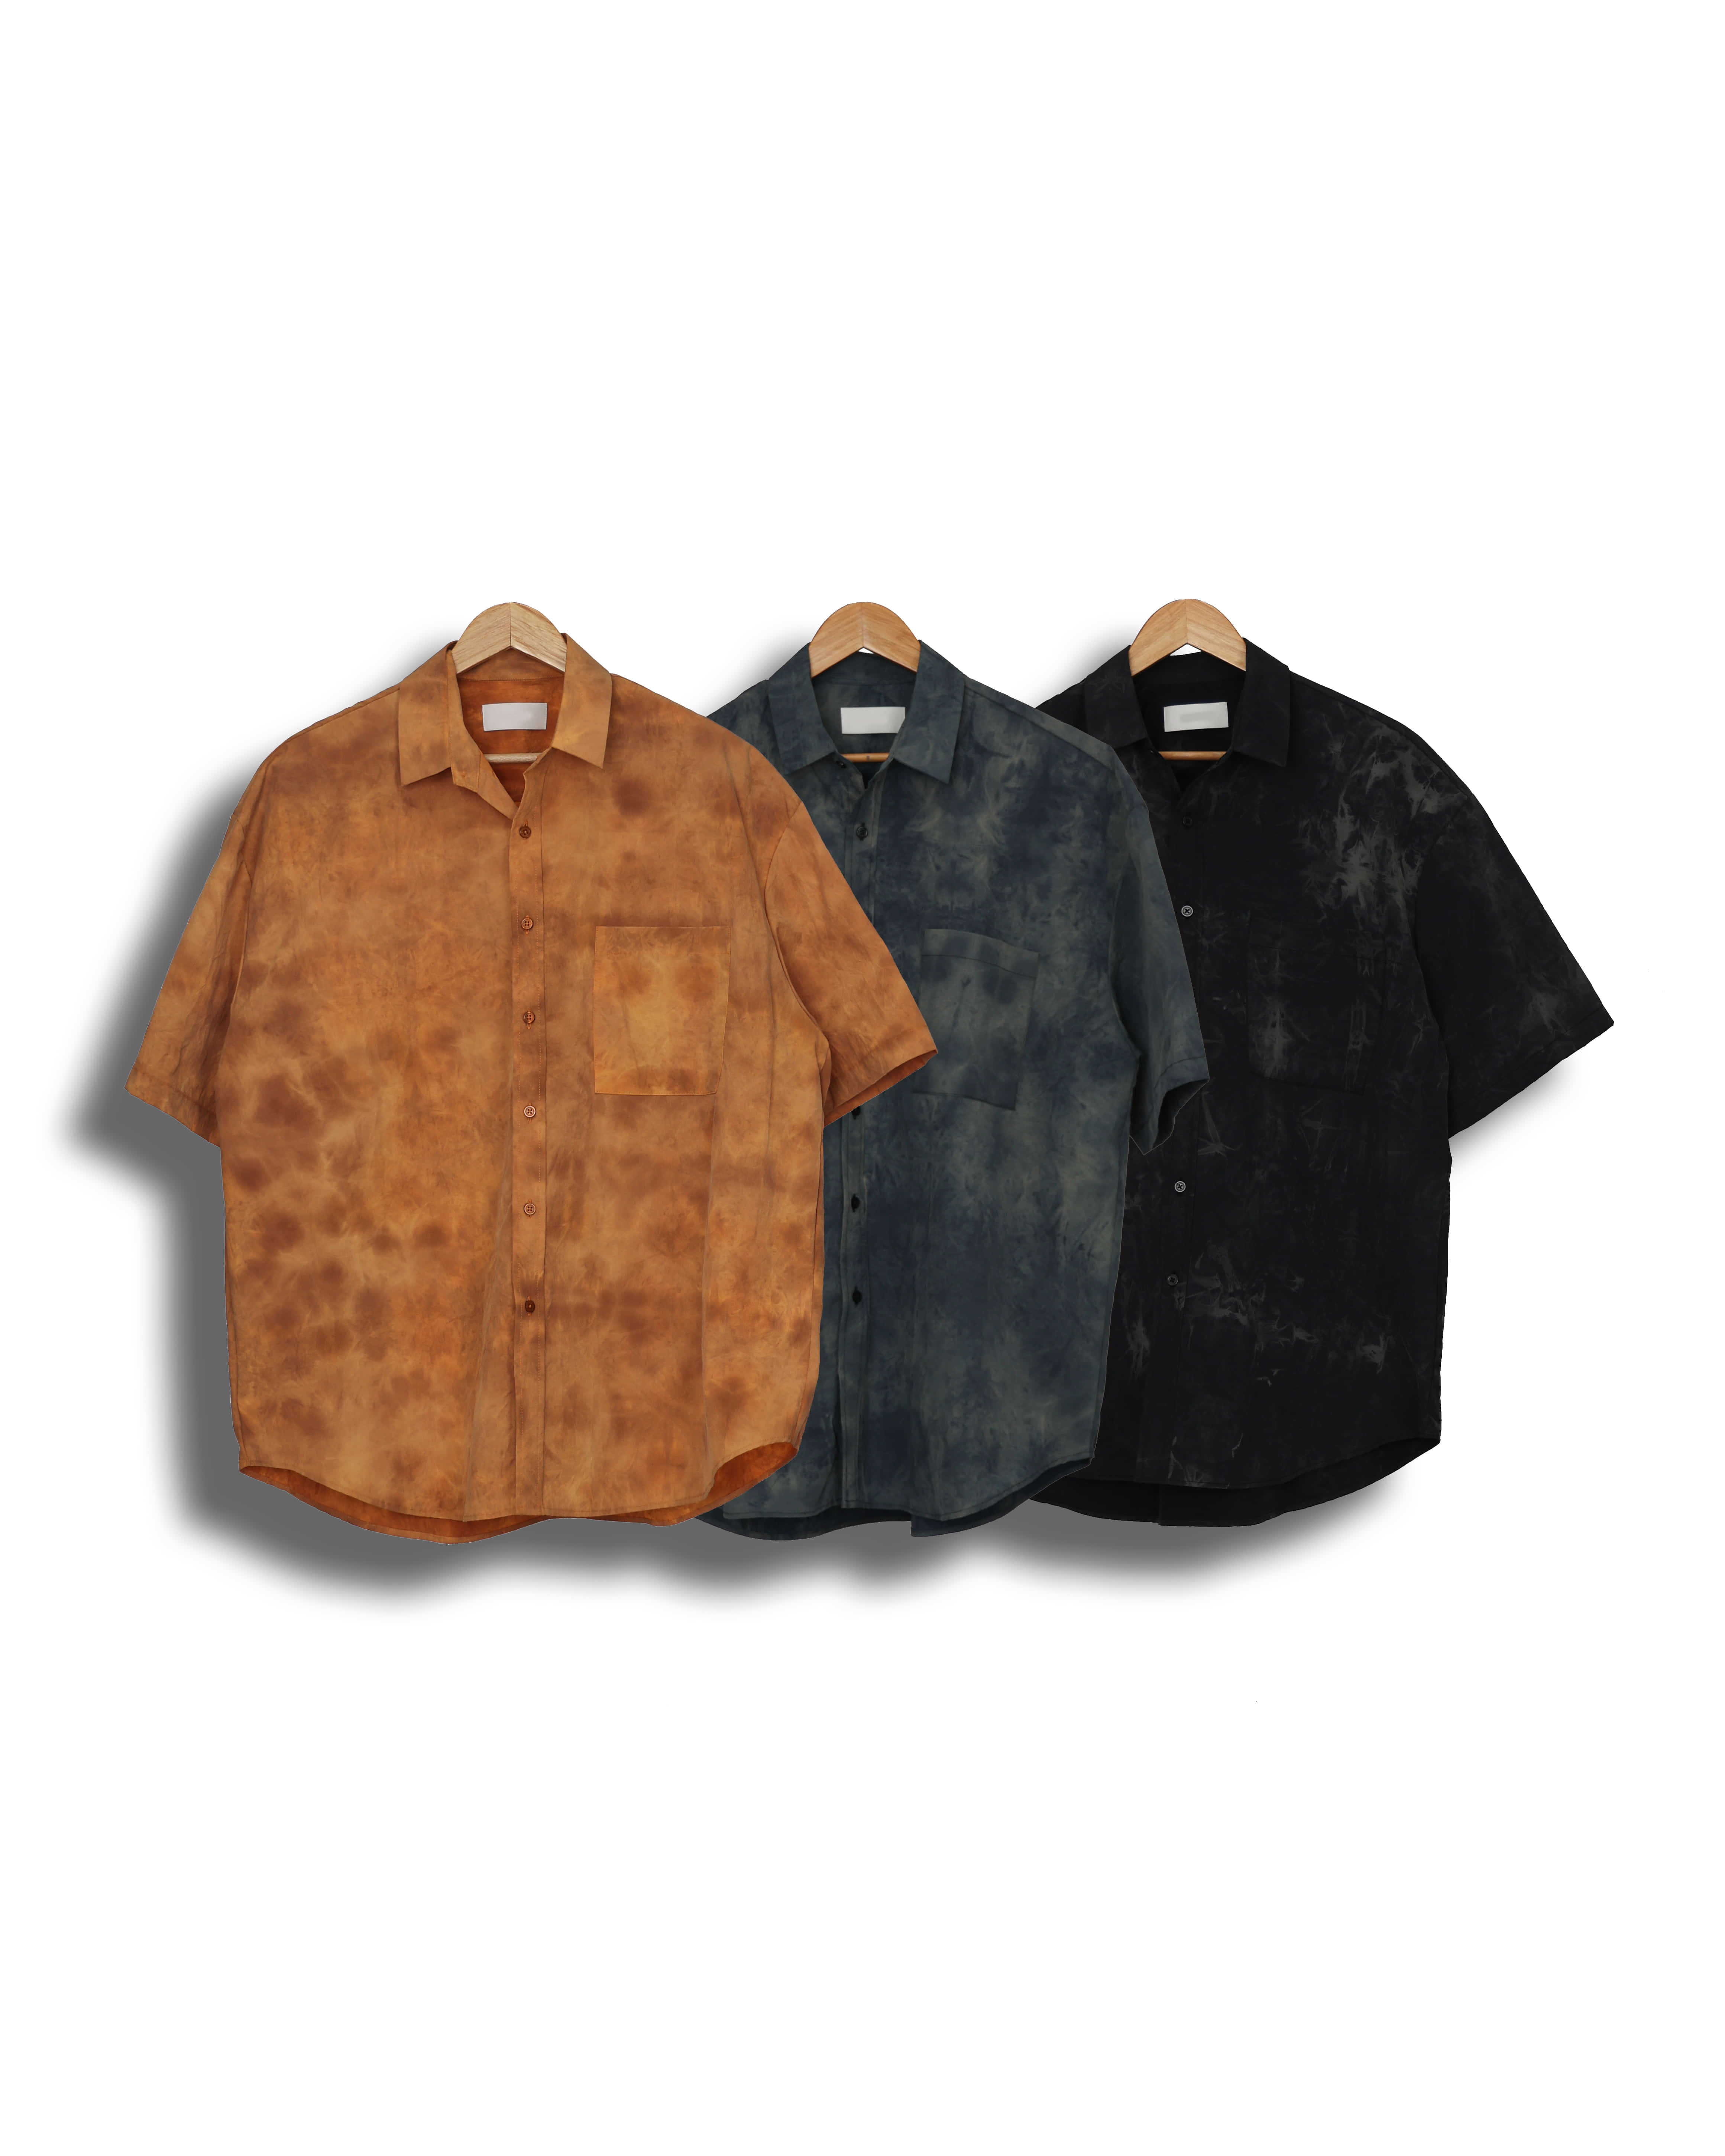 NTON Tye Dying Wide Half Shirts (Black/Navy/Orange)